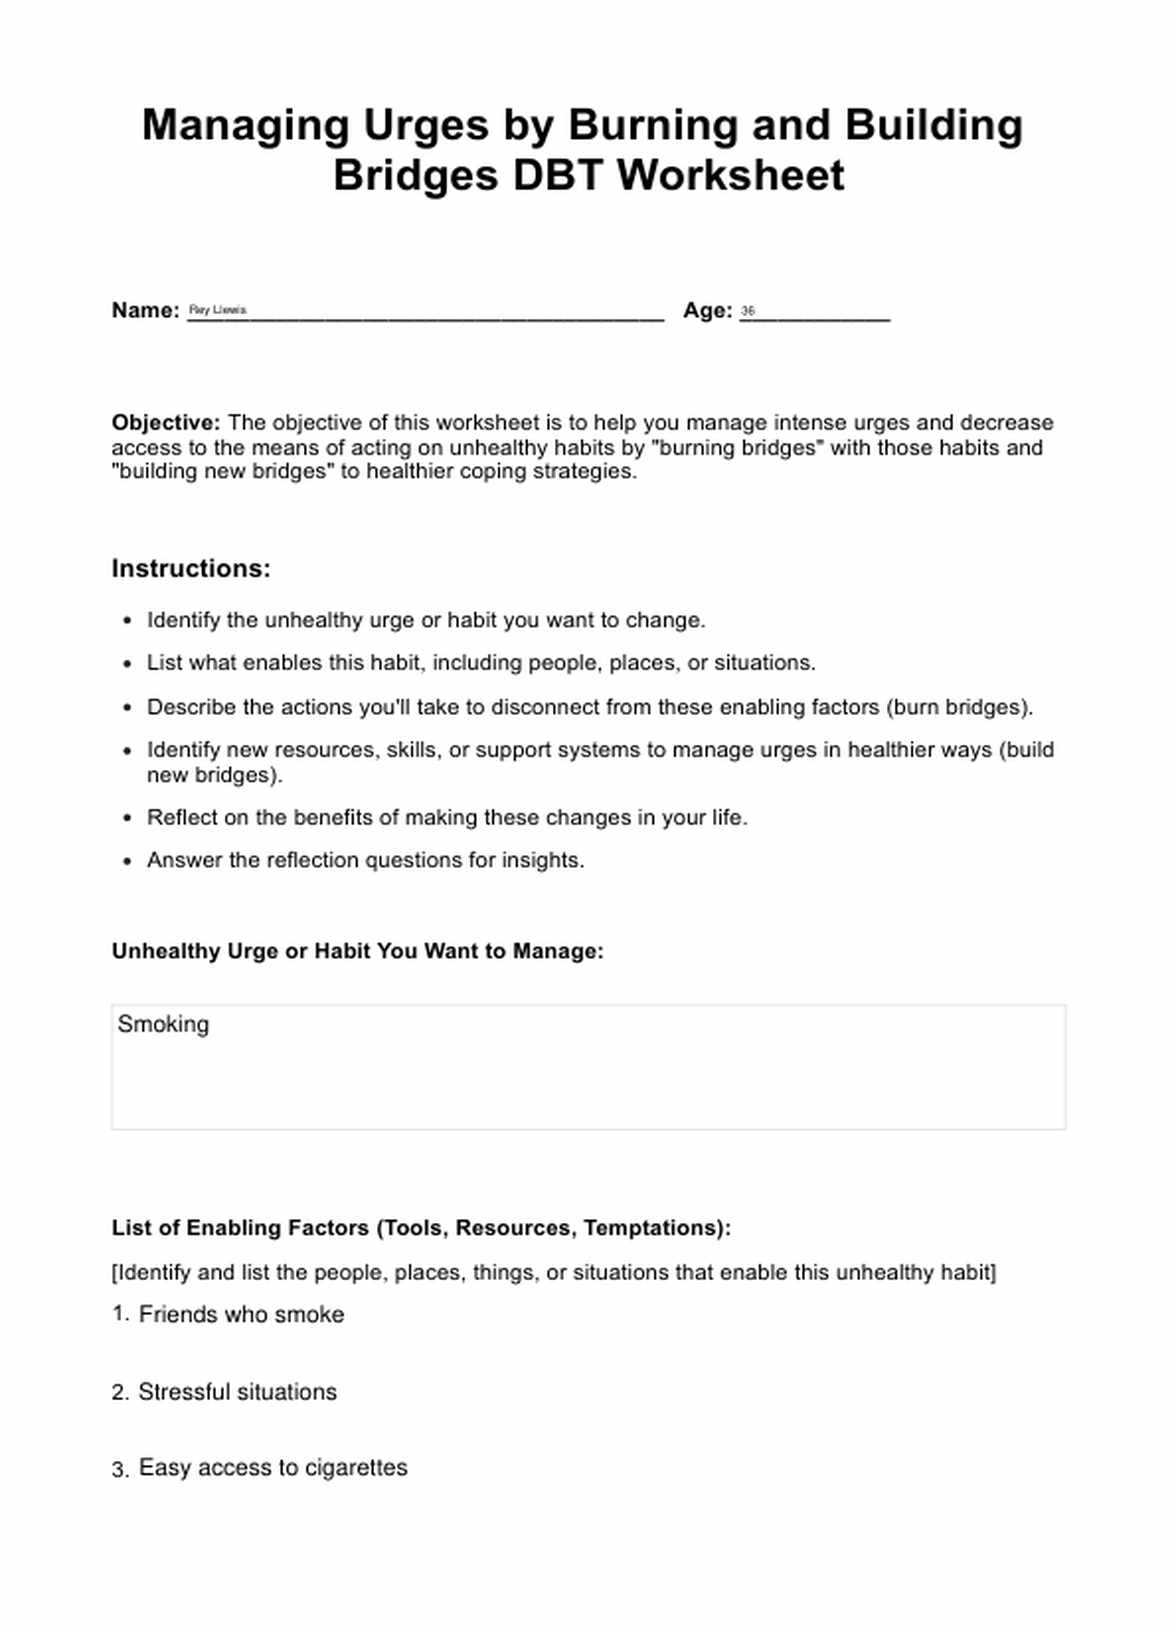 Managing Urges by Burning and Building Bridges DBT Worksheet PDF Example